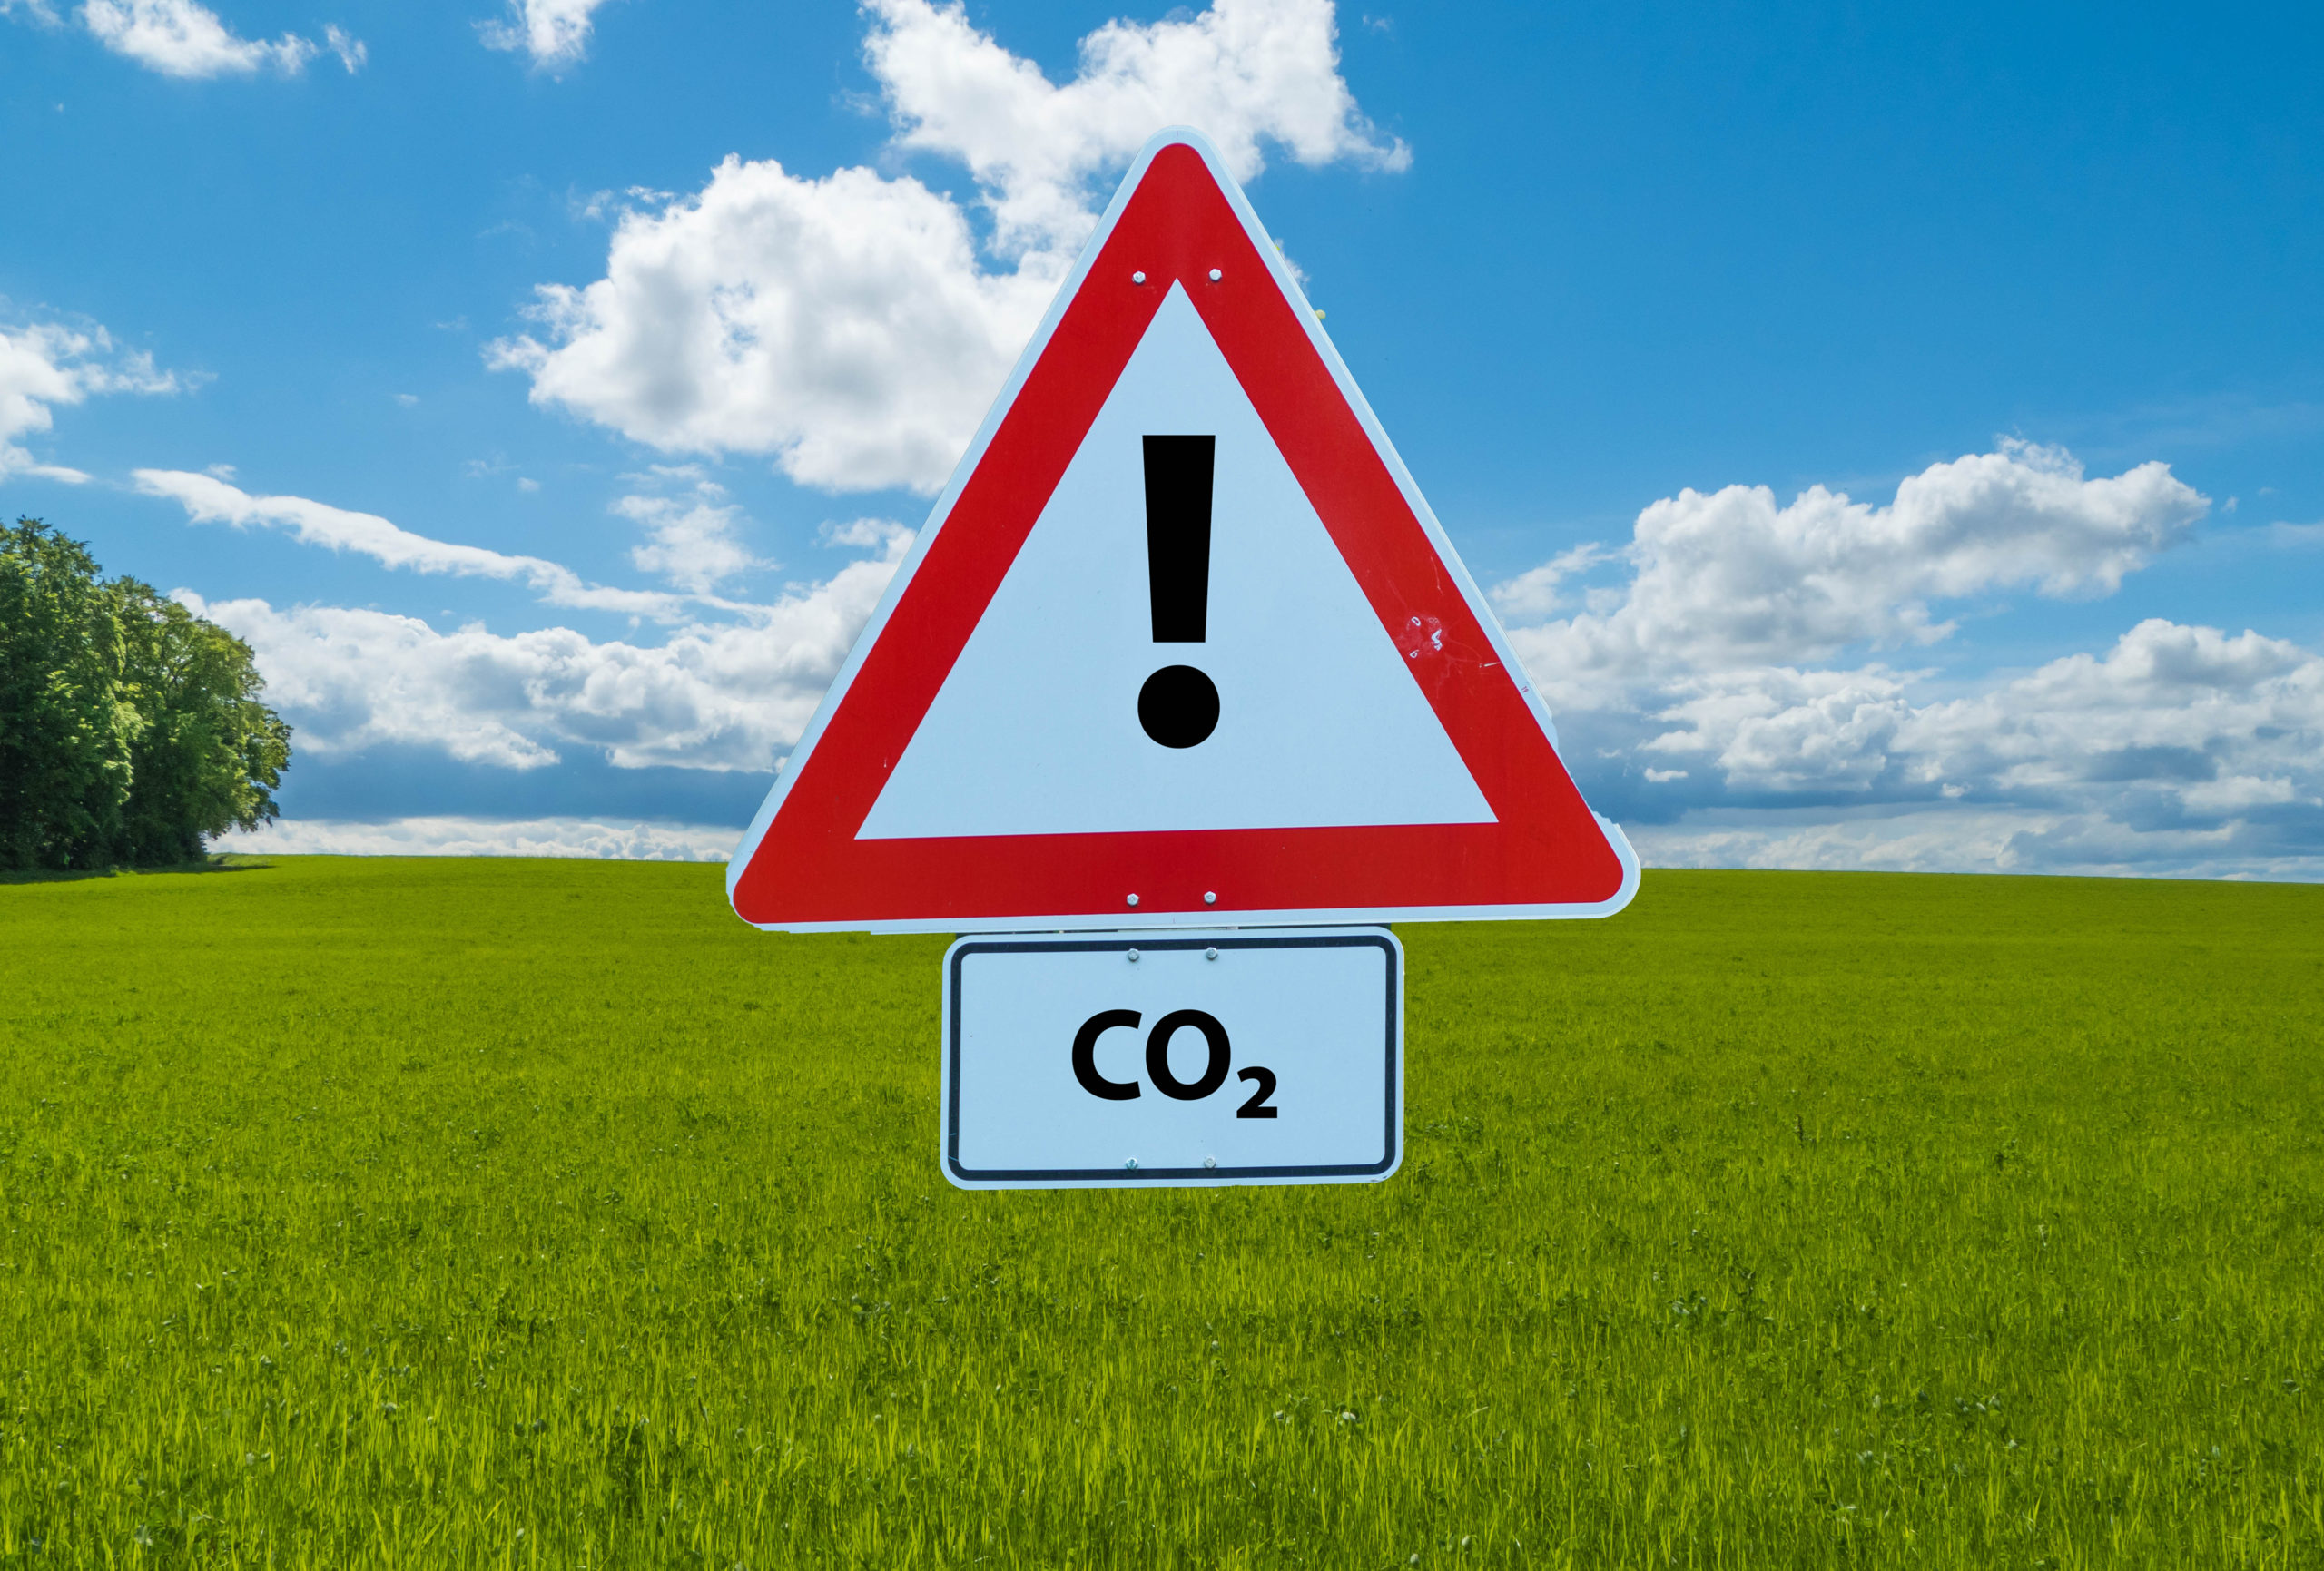 CO2 Grenzwerte für DGNB, LEED, BREEAM, EU-Taxonomie